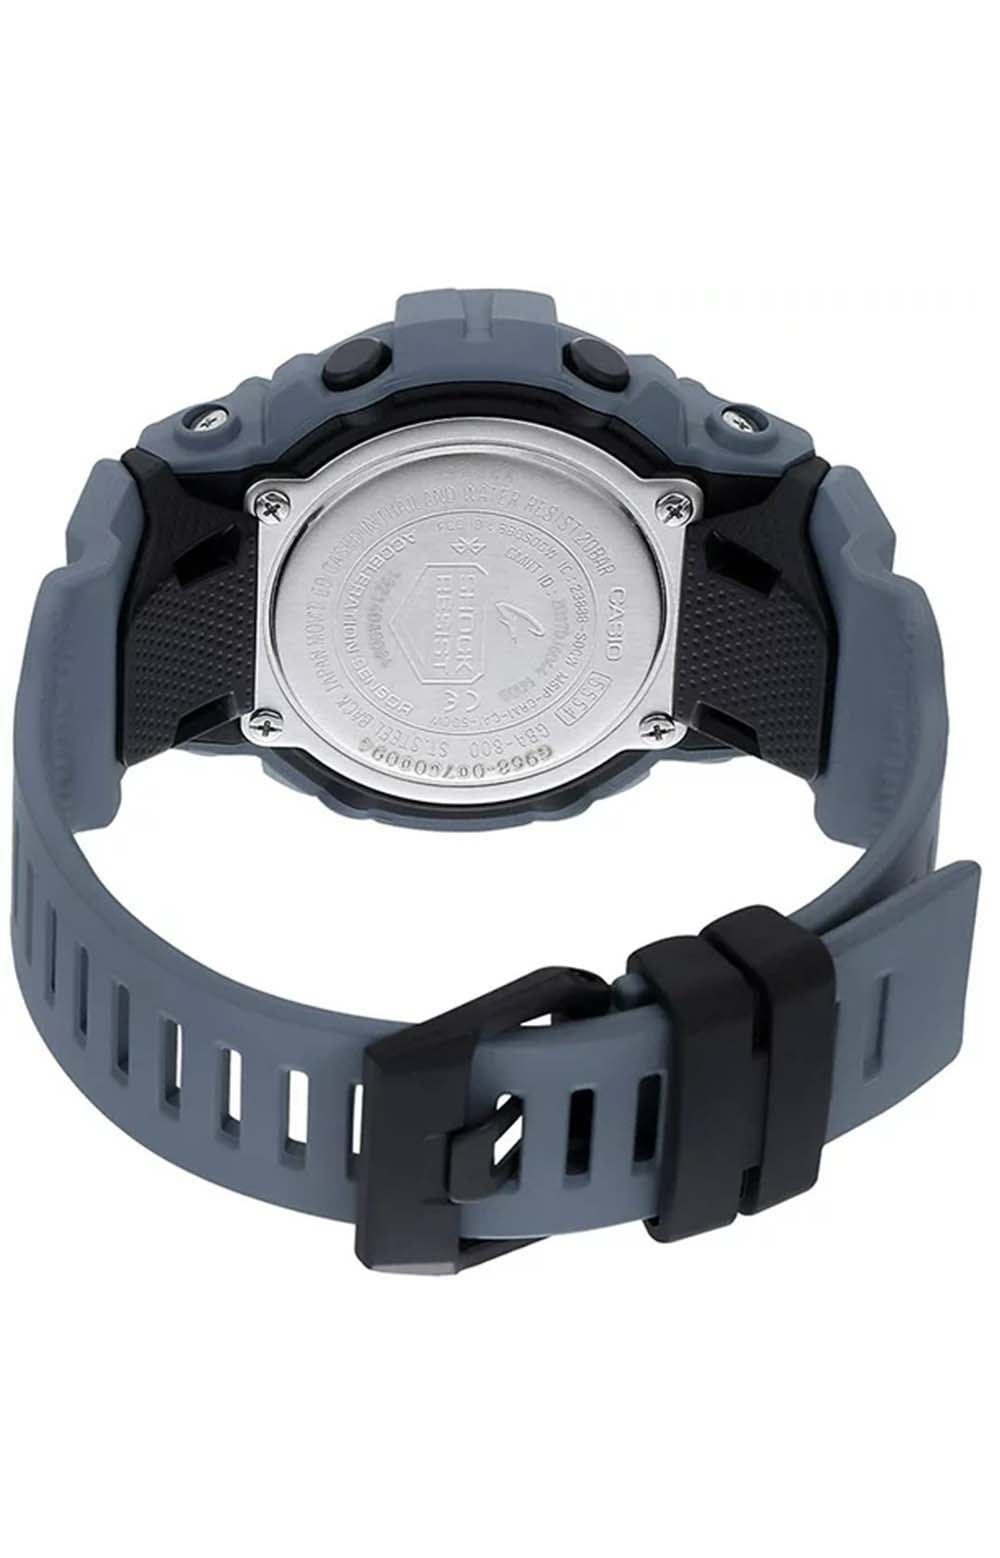 GBA800UC-2A Watch